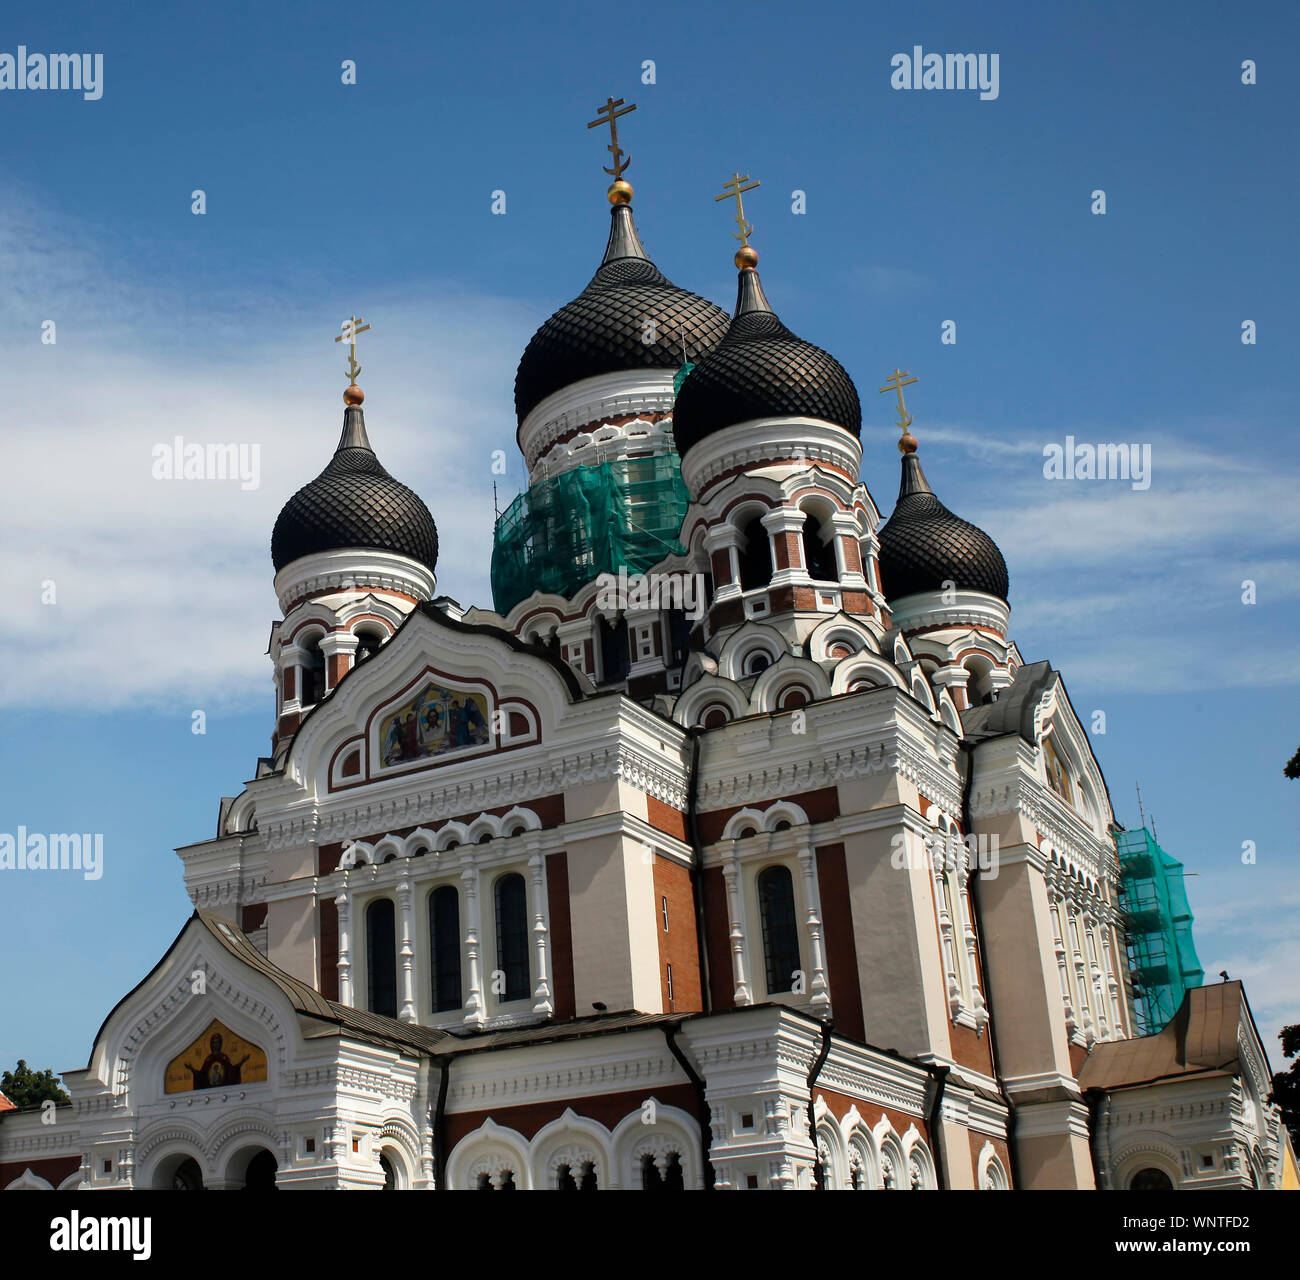 Alexander Newski Russisch-Orthodoxe Kathedrale, Tallinn, Estland Stockfoto